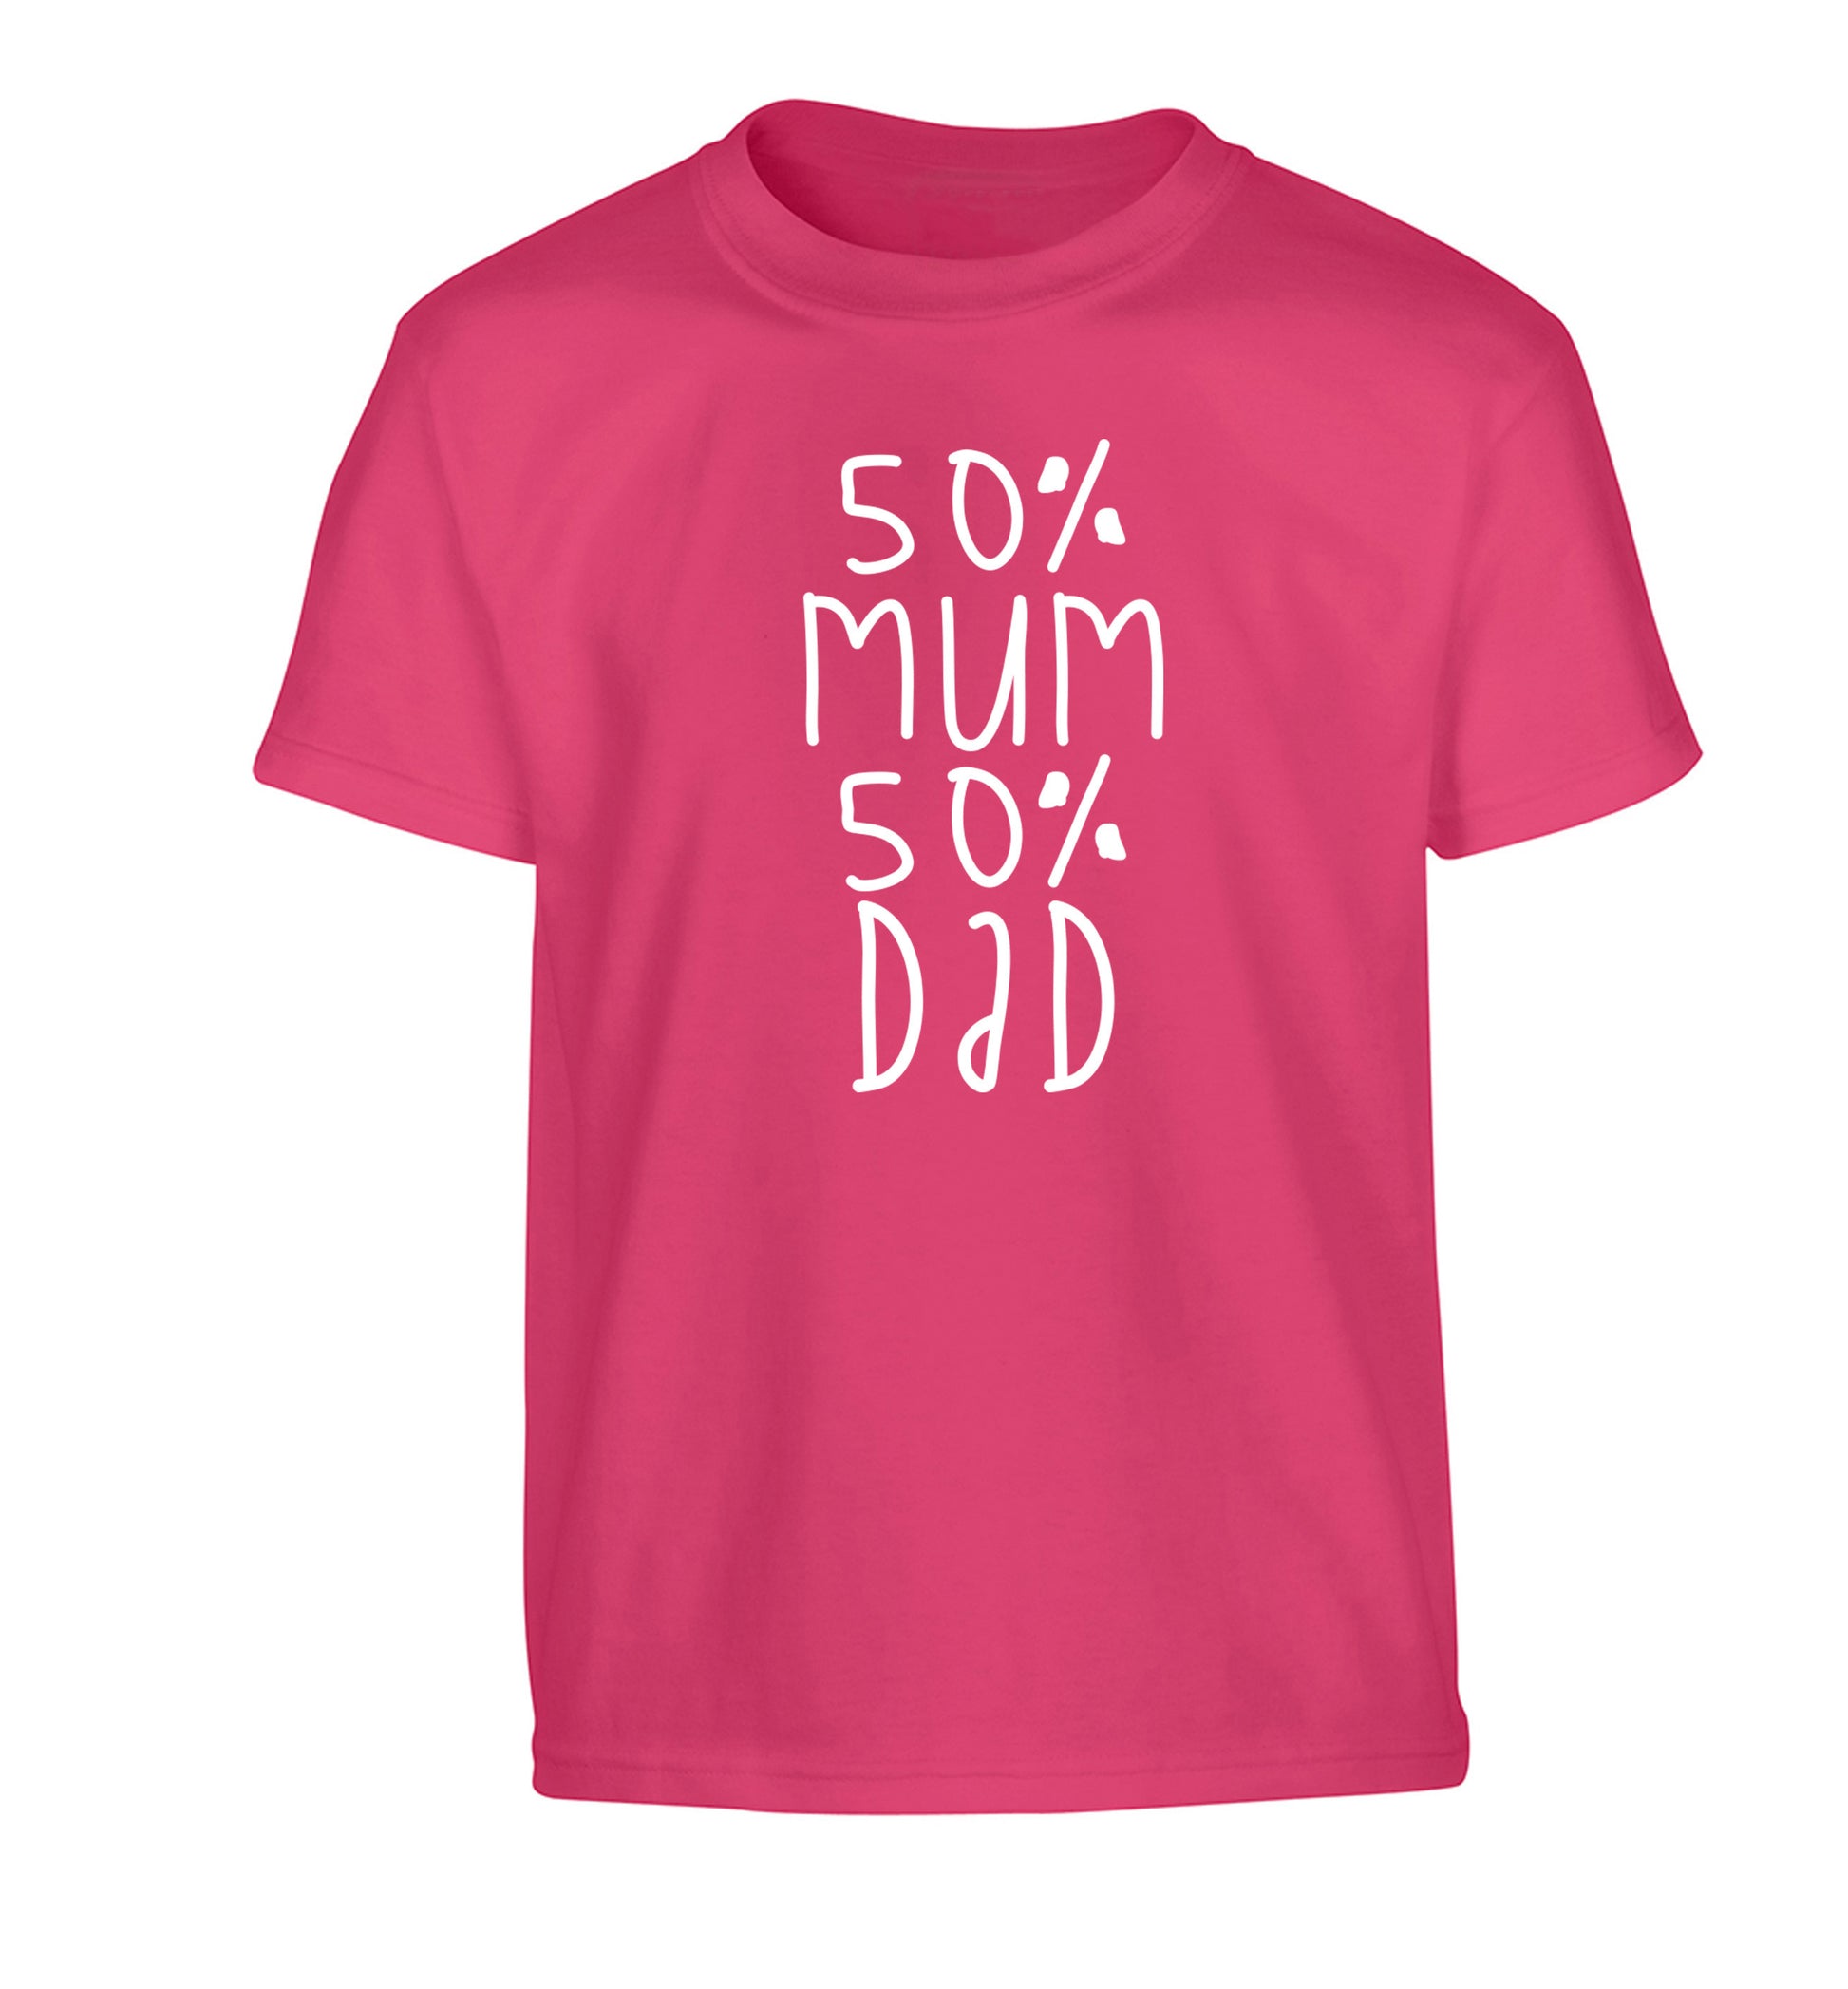 50% mum 50% dad Children's pink Tshirt 12-14 Years